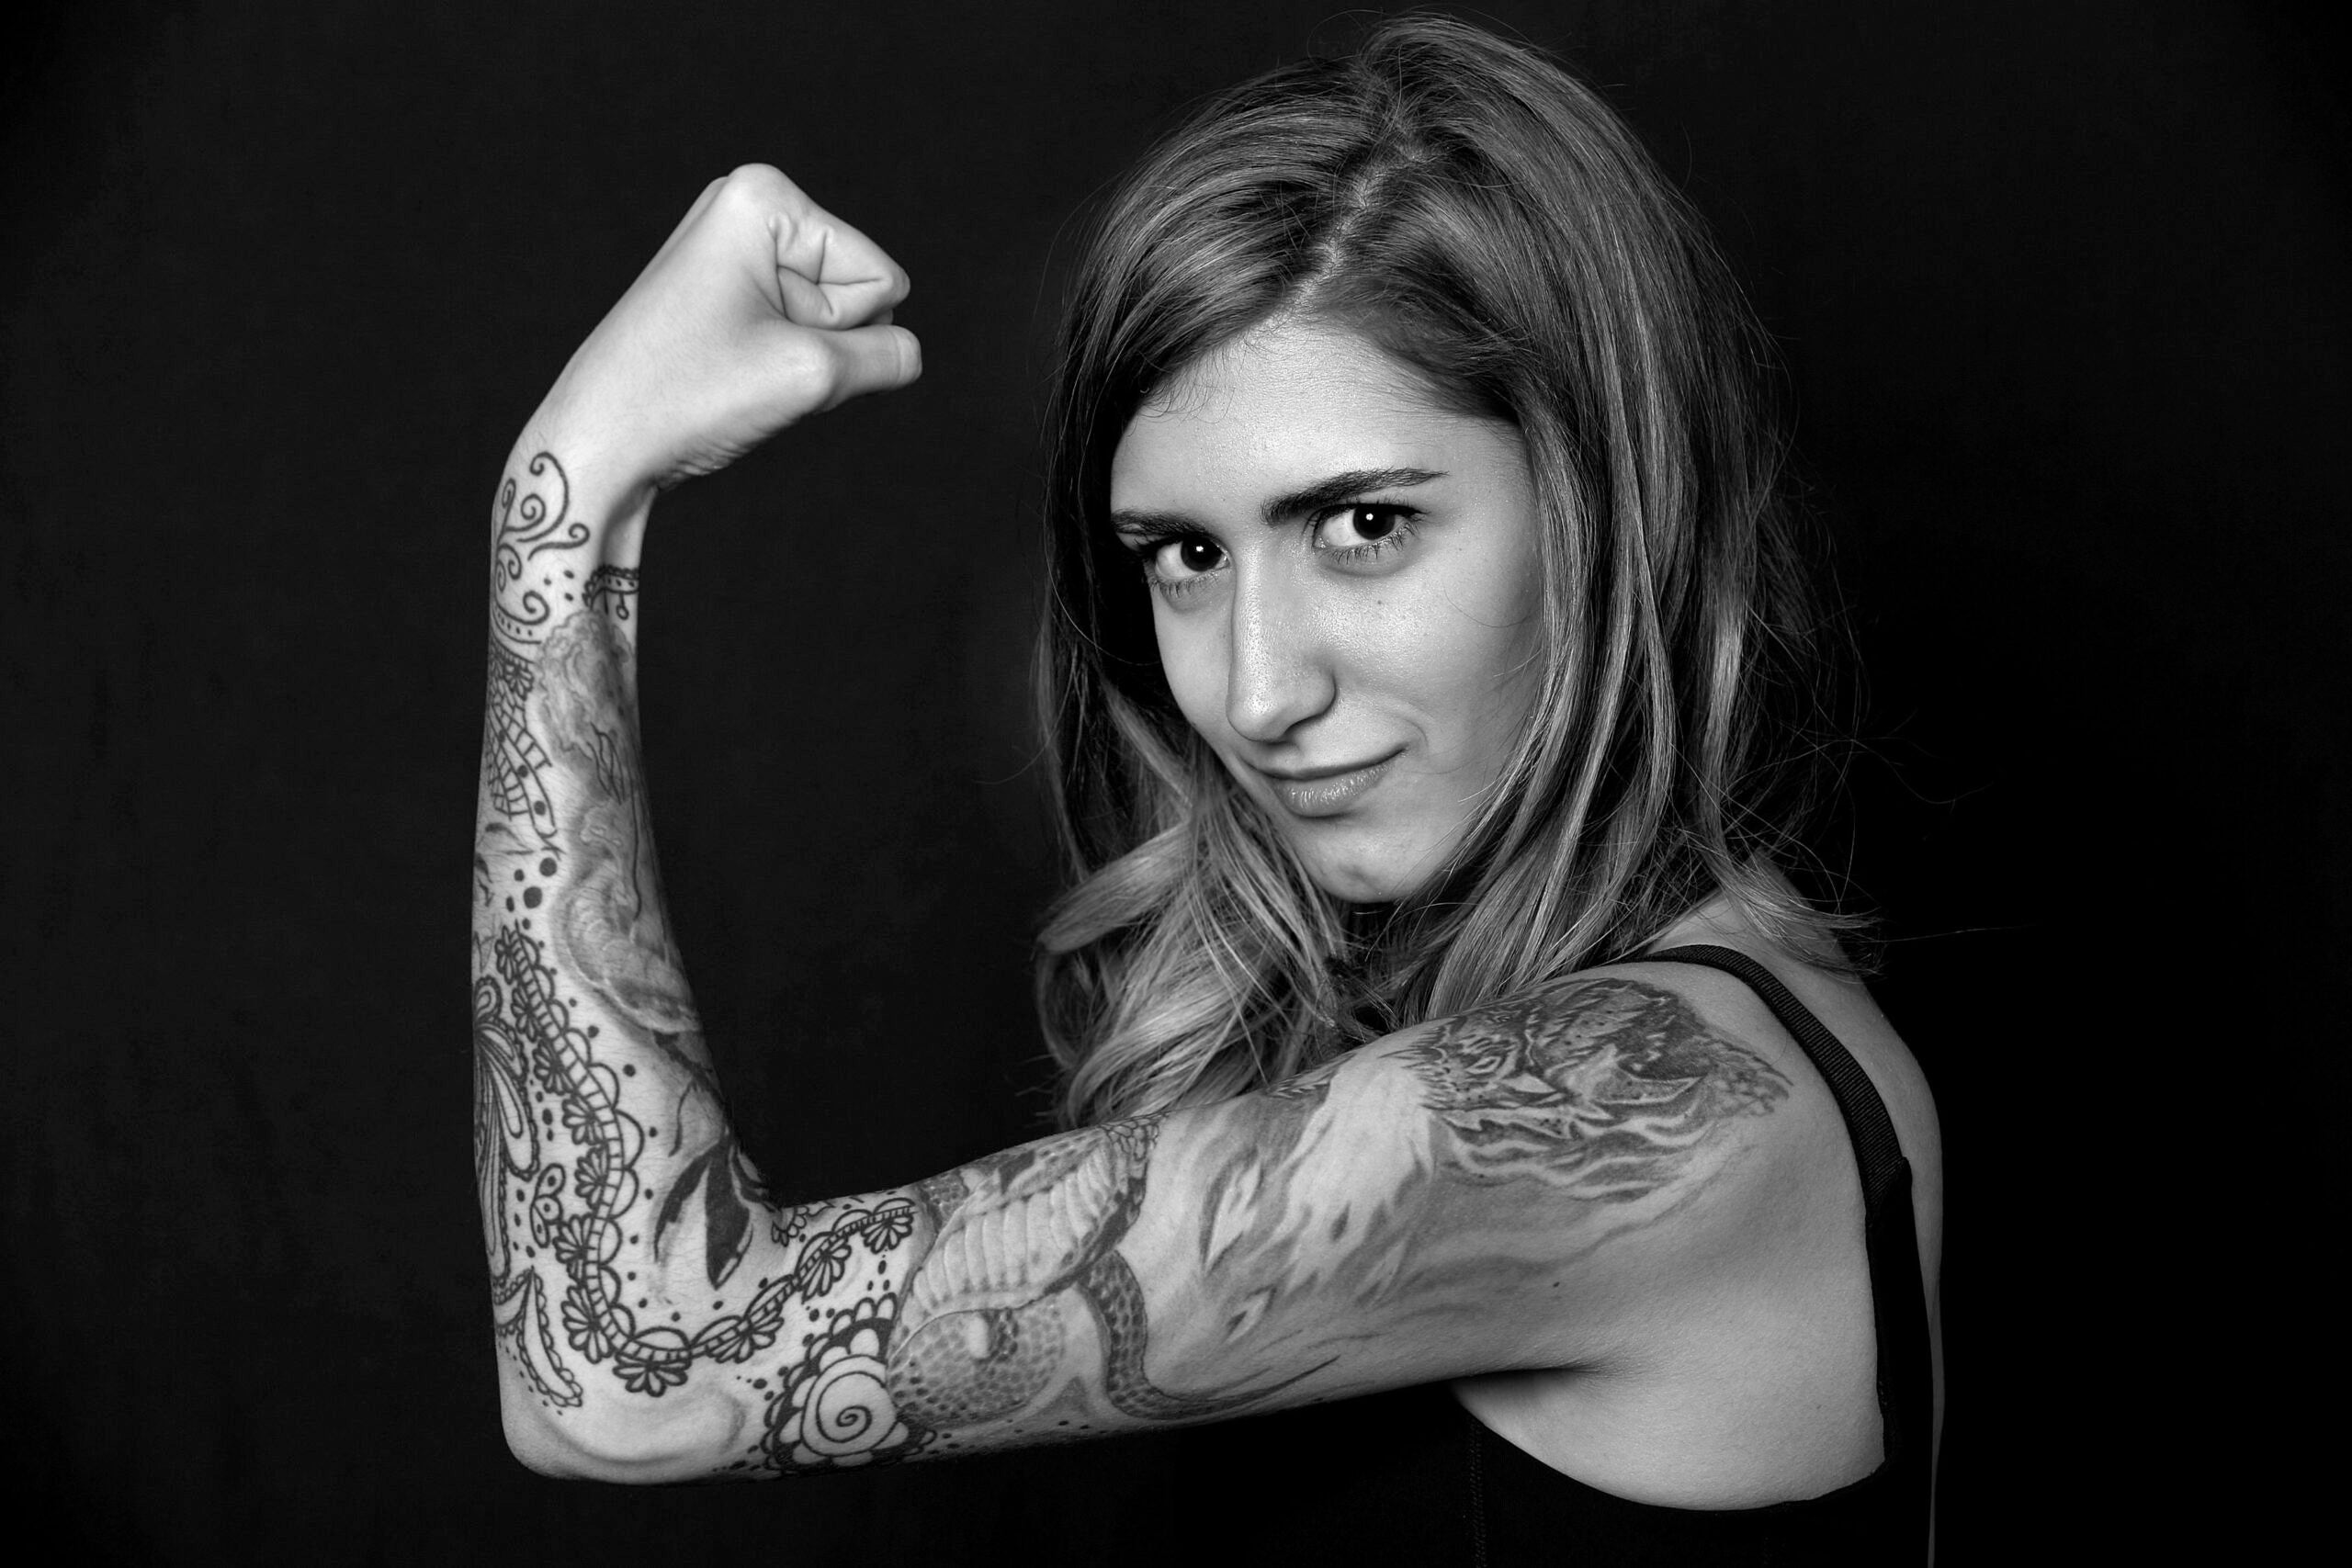 Marathon bombing survivor Sydney Corcoran says tattoos have helped her heal